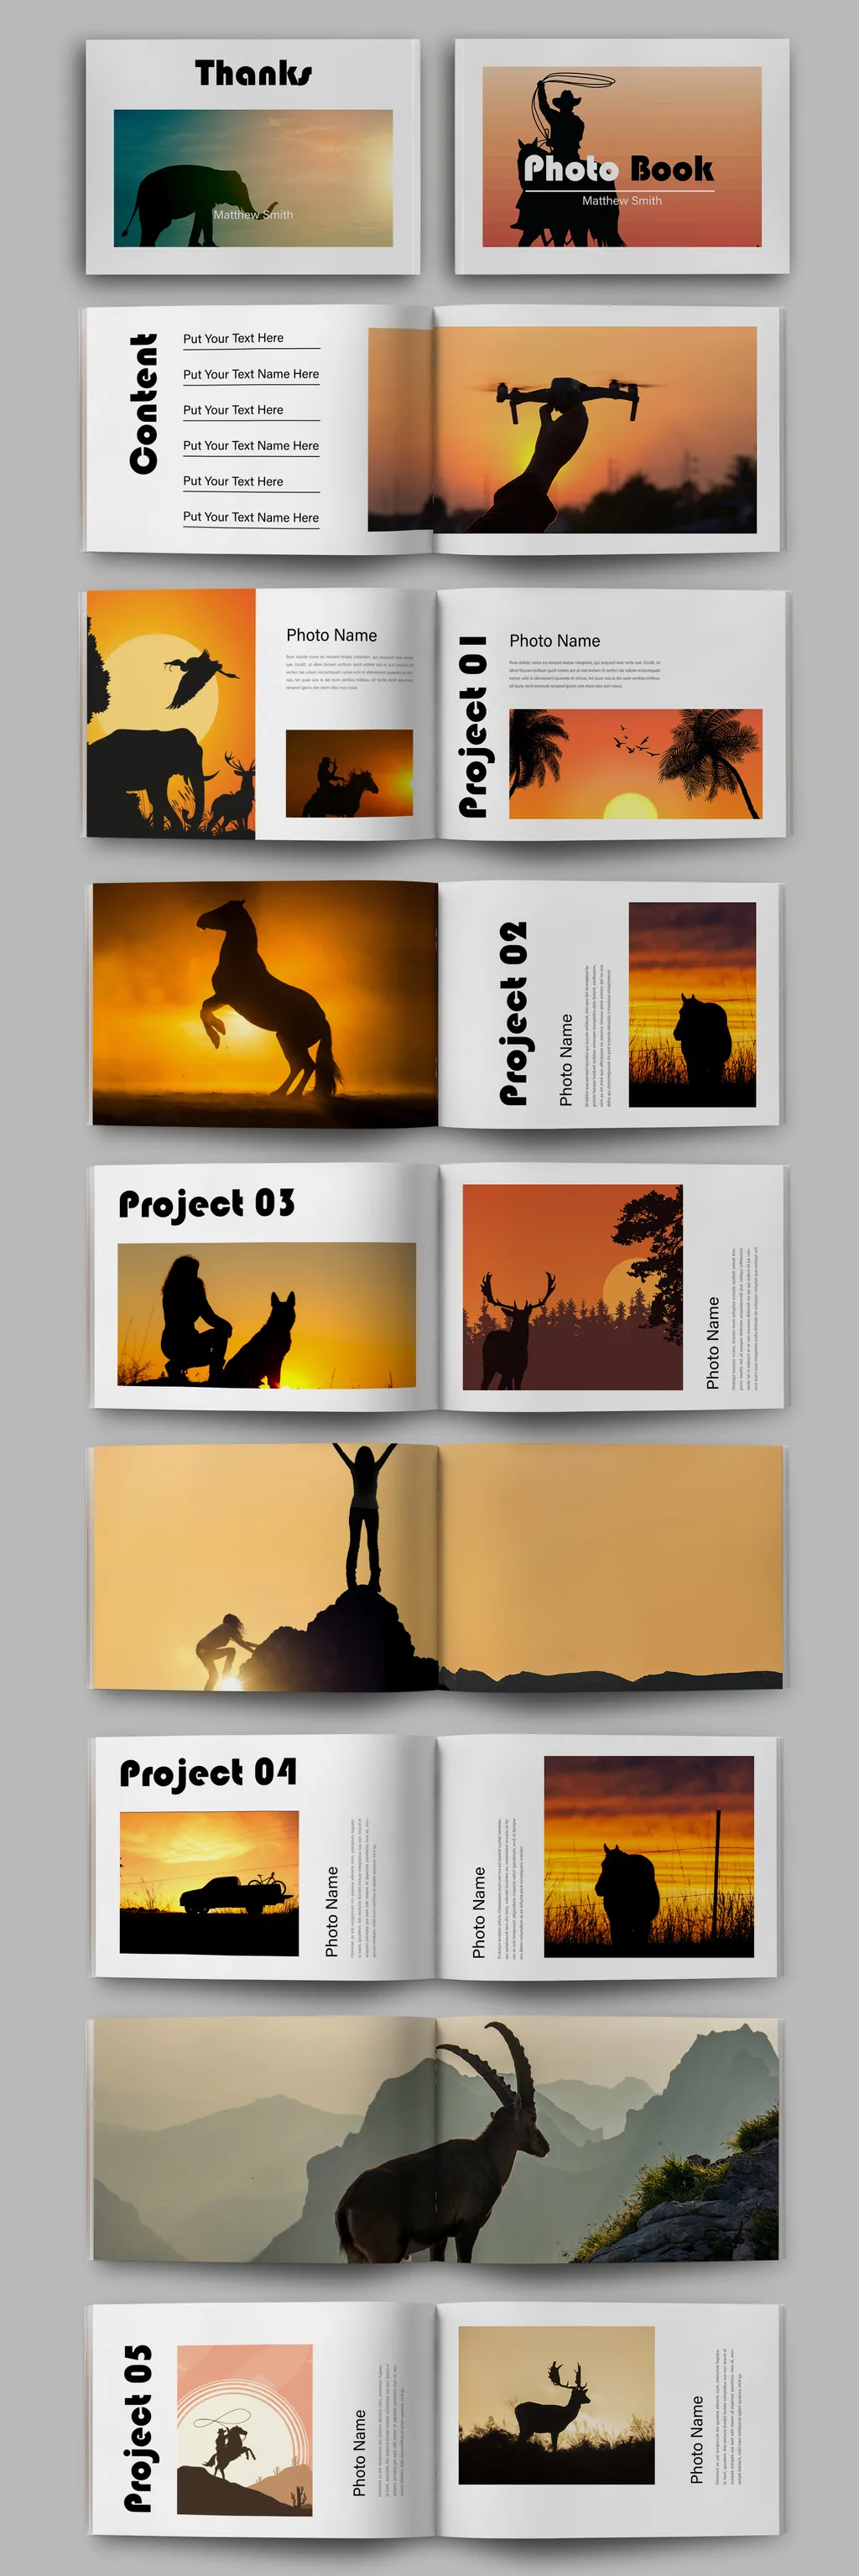 Adobestock - Photo Book Design Layout 739429795